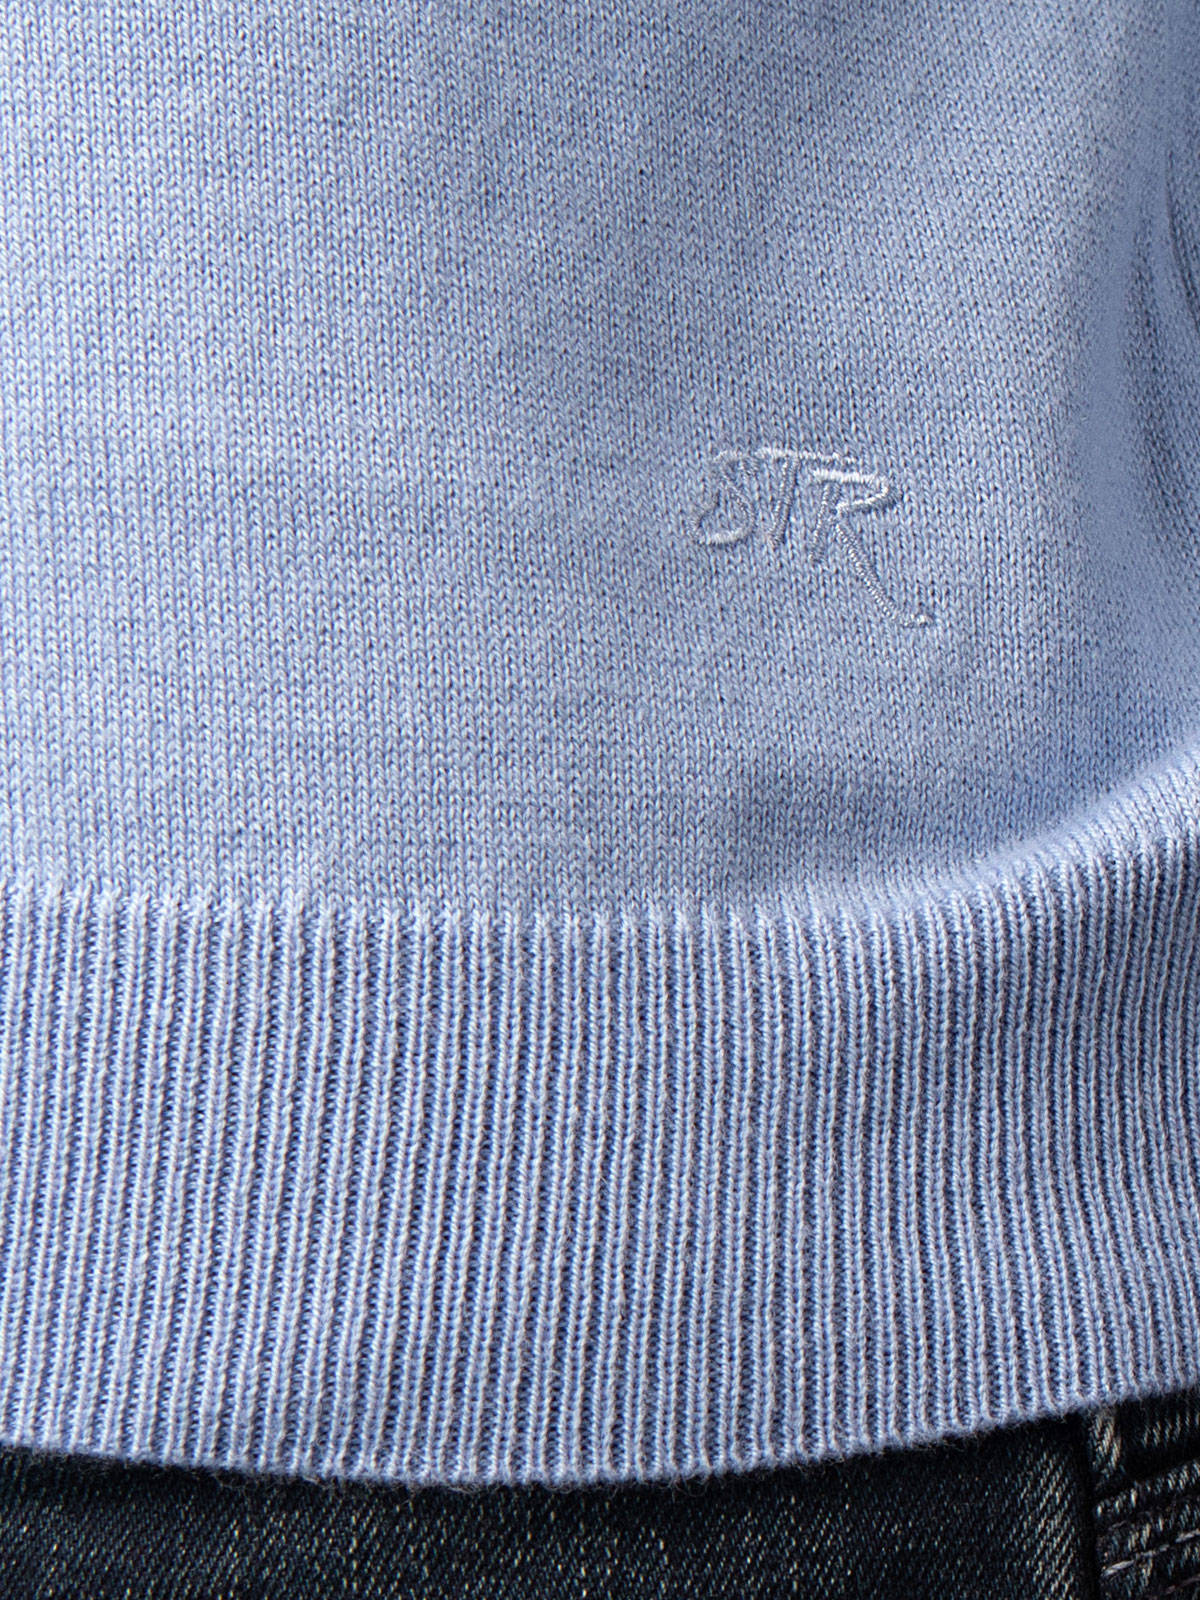 Sky blue sweater base pattern - 35288 € 27.00 img4